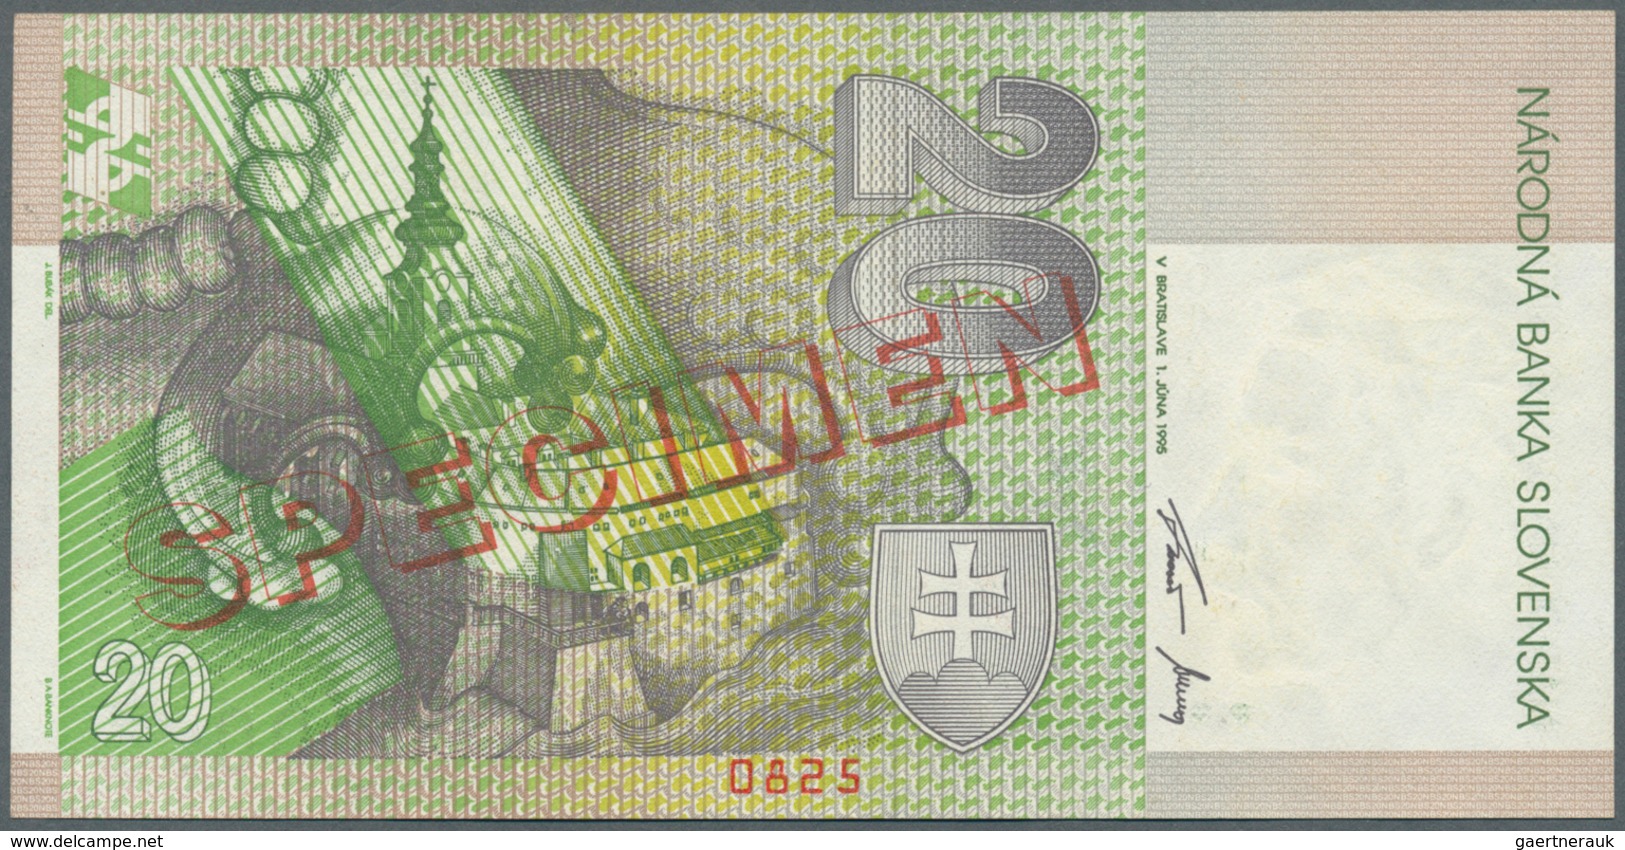 02375 Slovakia / Slovakei: Set Of 2 Specimen Notes Containing 20 And 1000 Korun 1995 P. 20s, 24s, First In - Slovakia